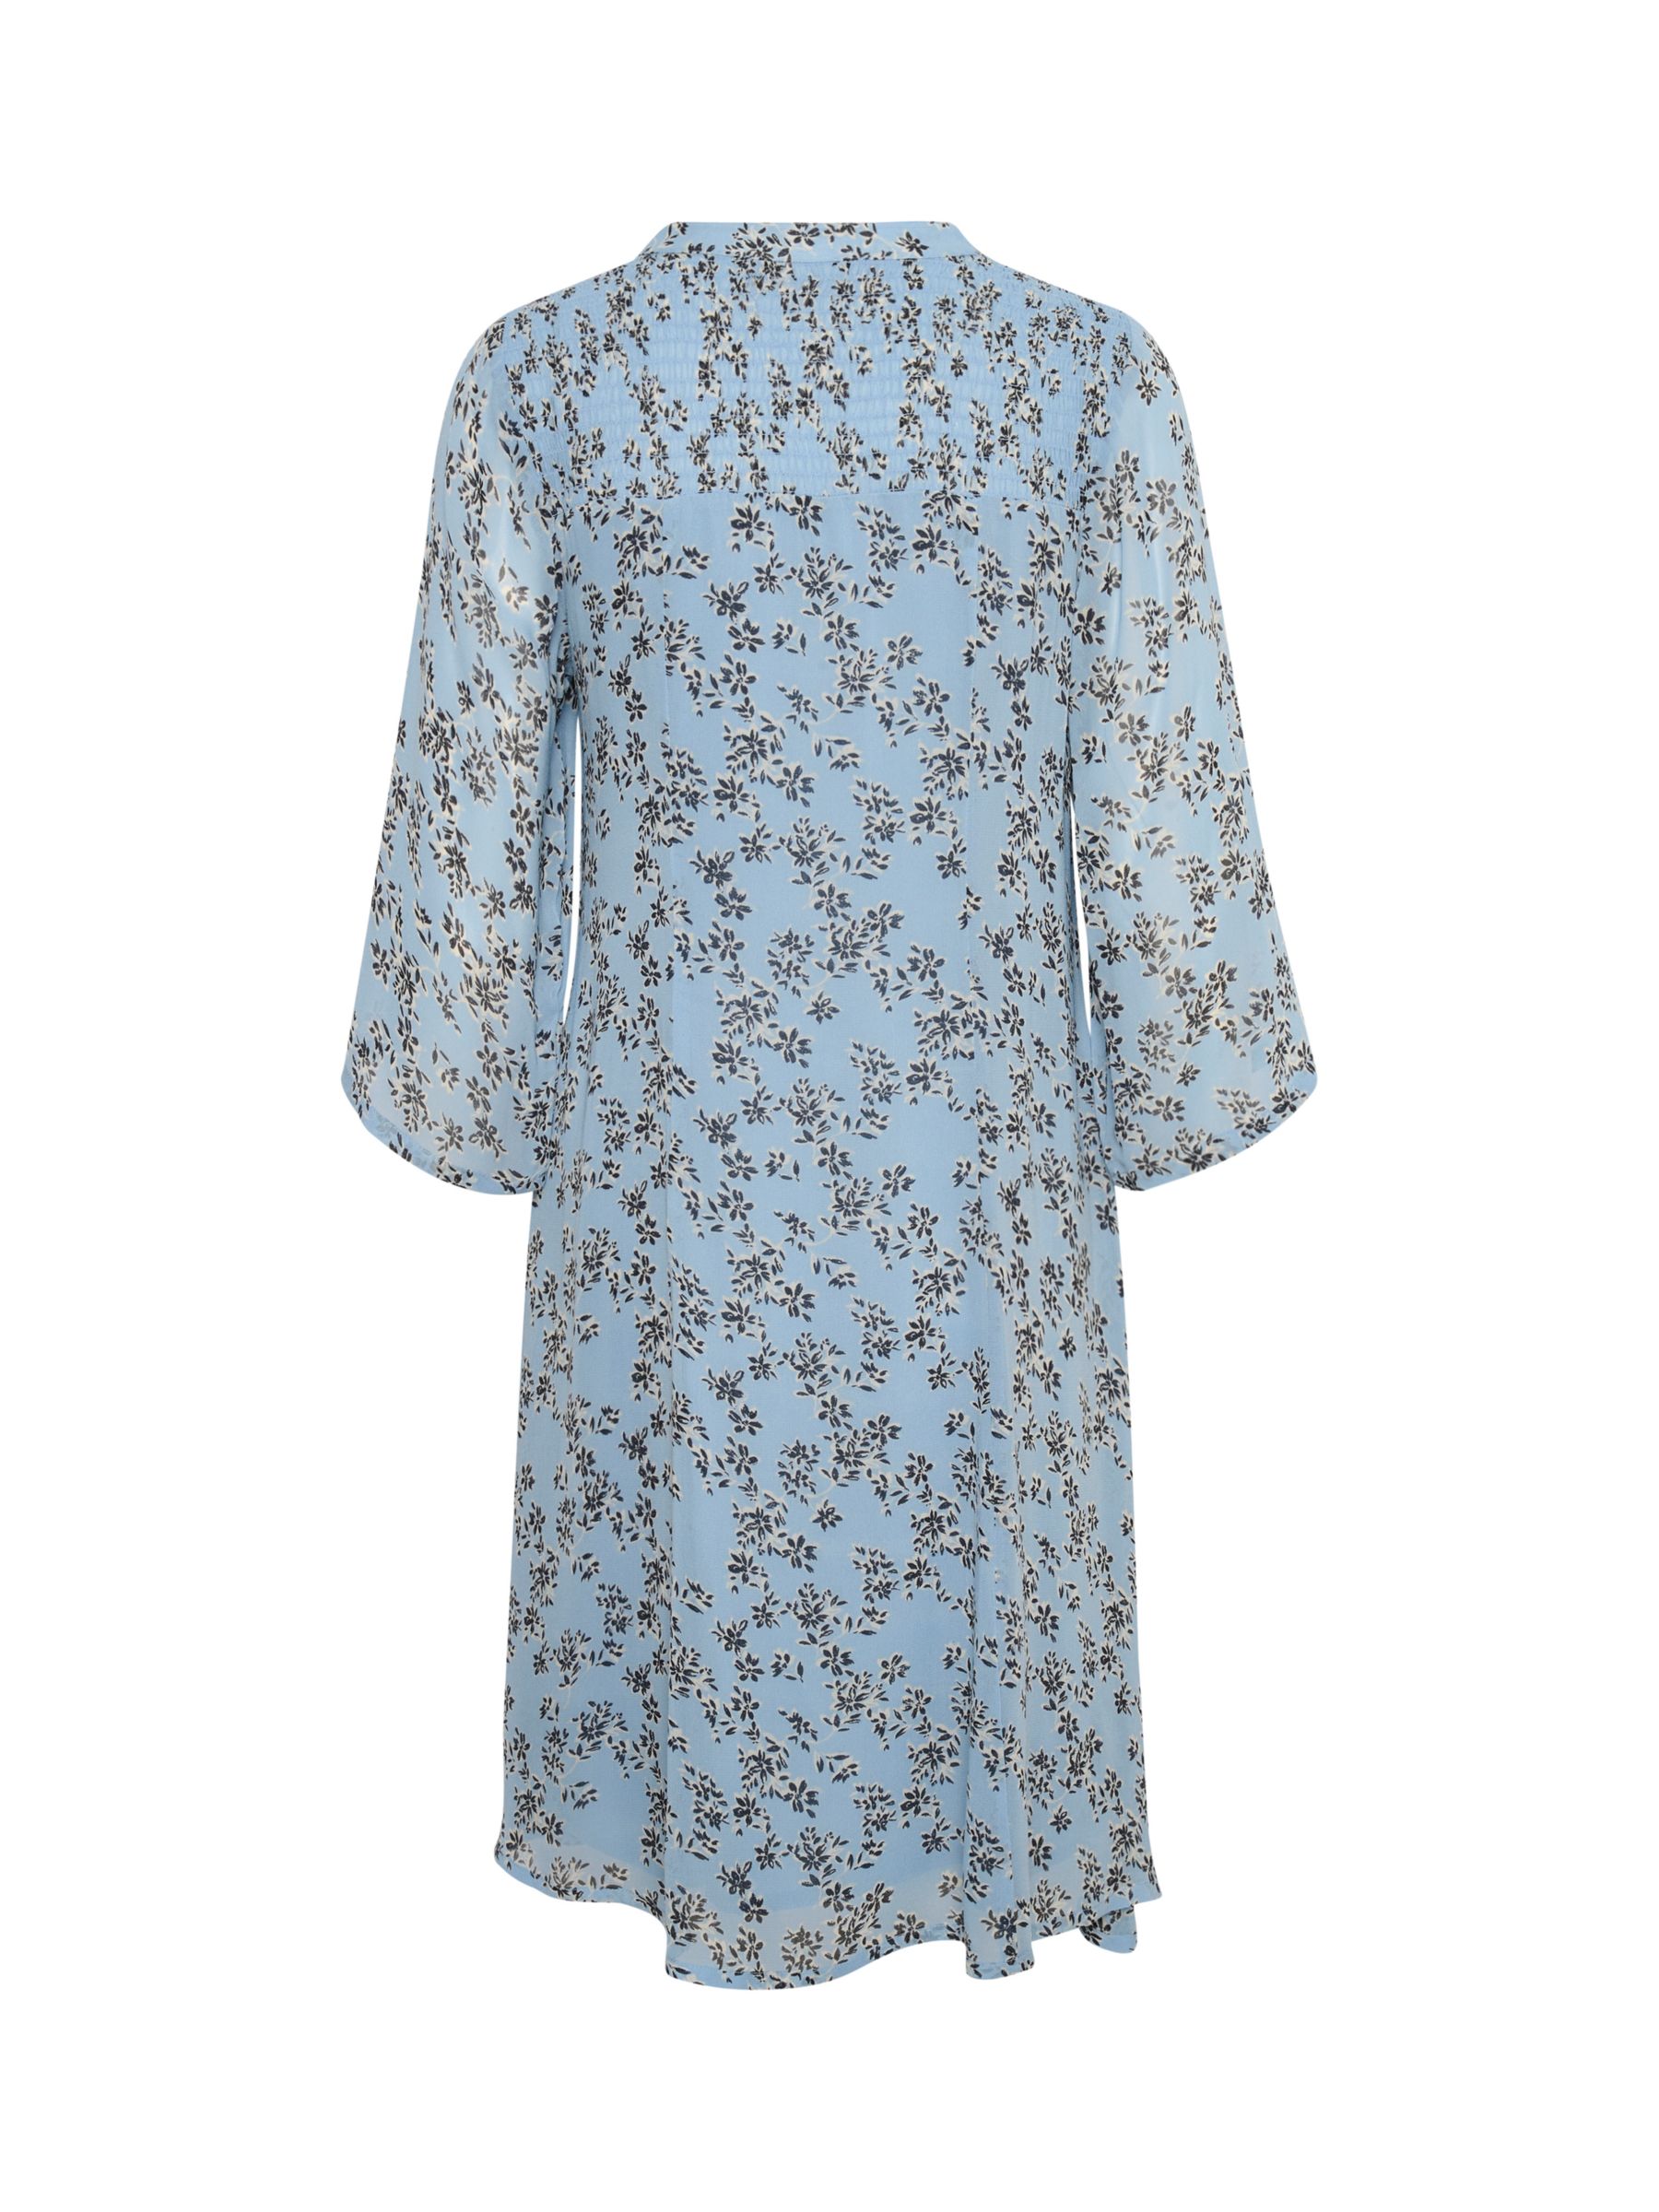 Buy Part Two Elka Floral Chiffon 3/4 Sleeve Dress, Faded Denim Online at johnlewis.com